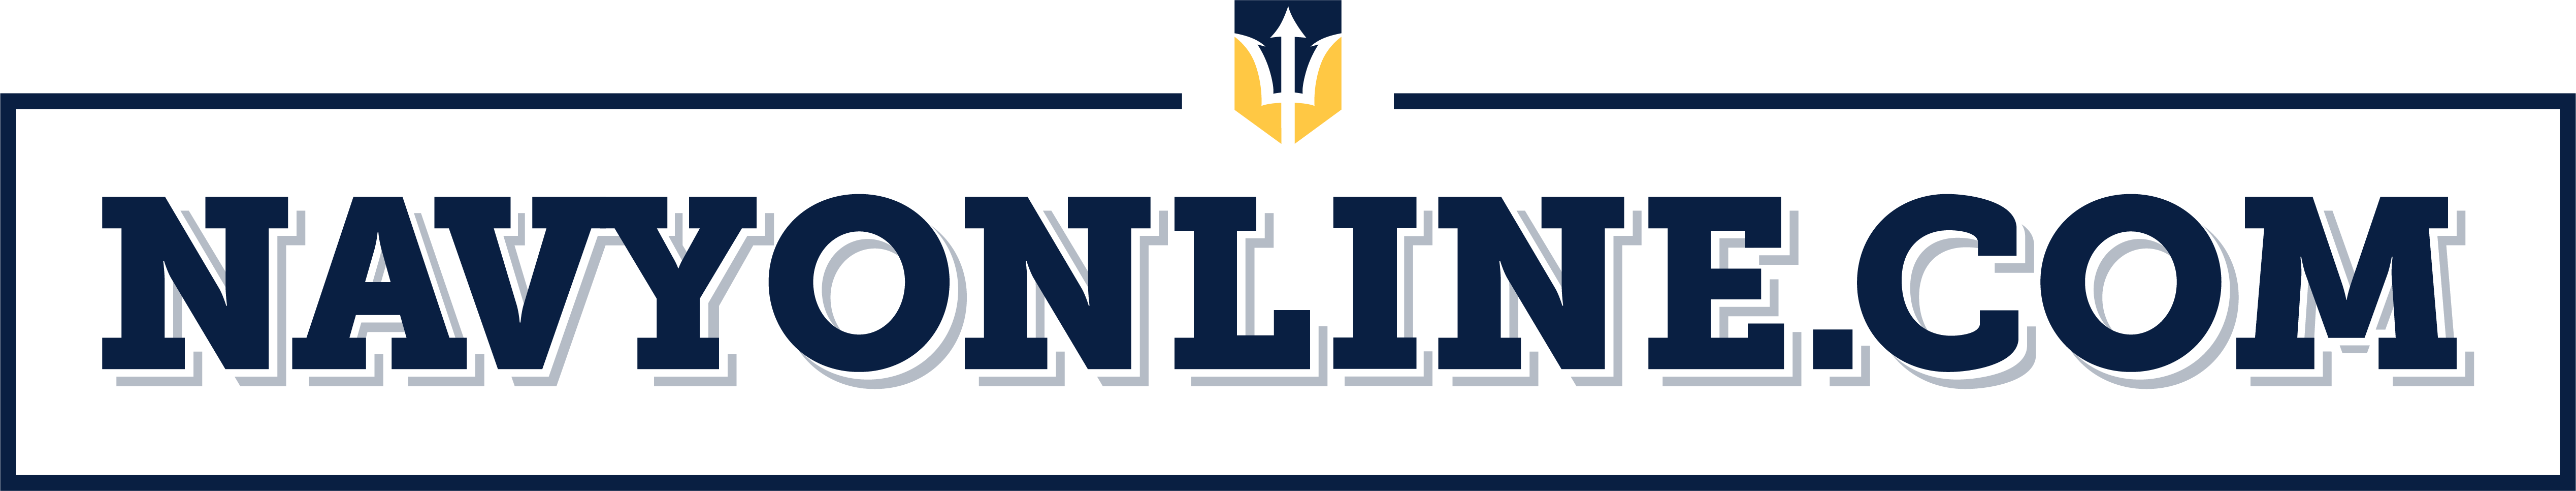 Navy Online Logo